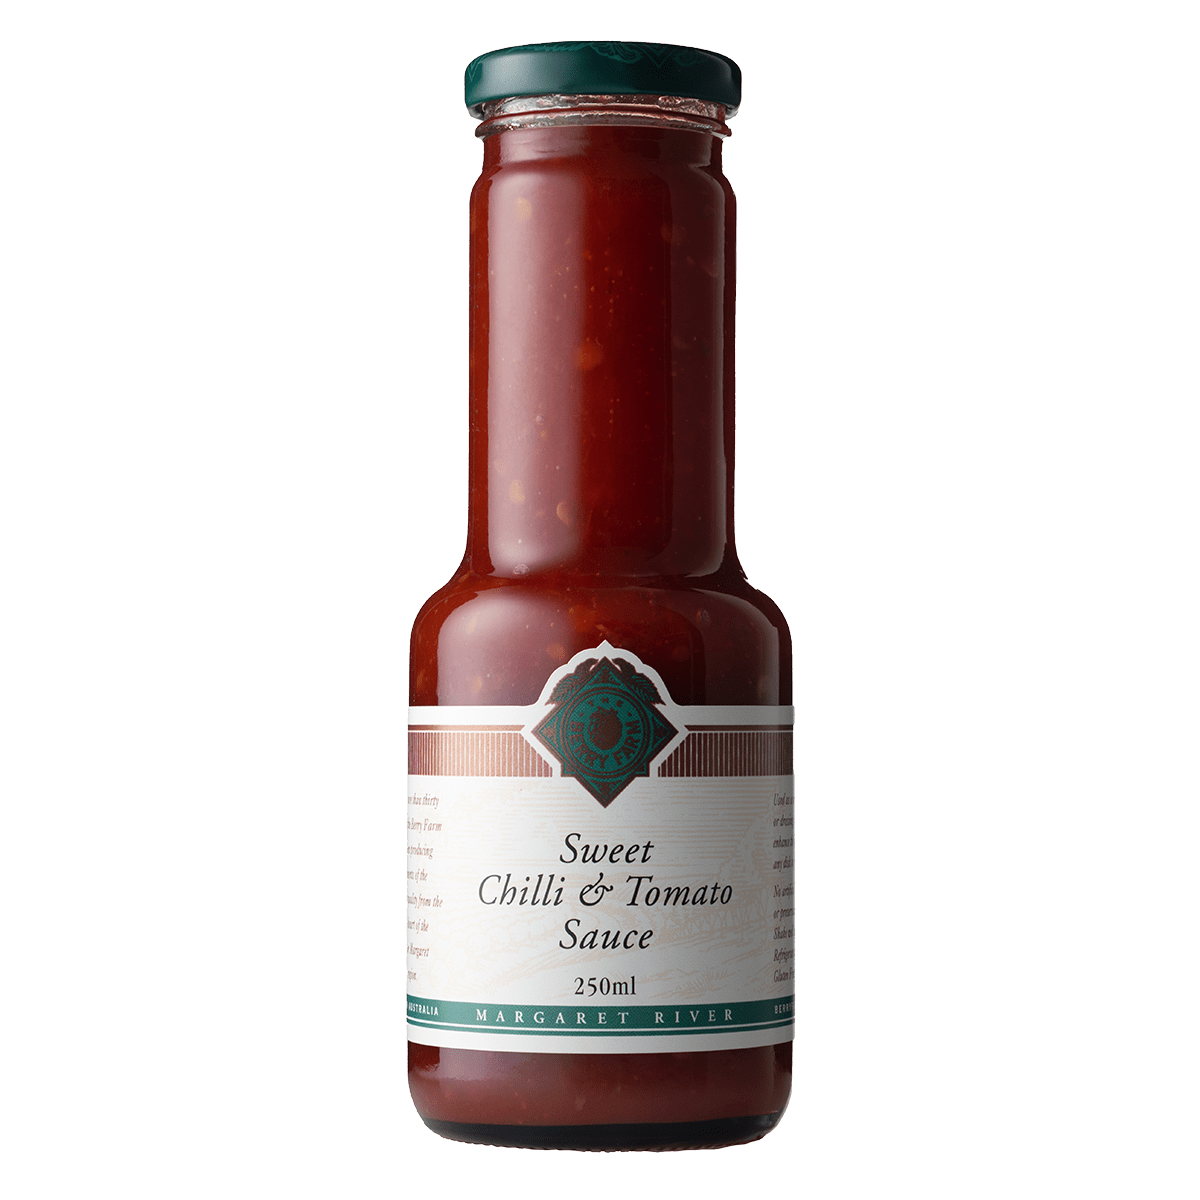 A jar of Sweet Chilli & Tomato Sauce